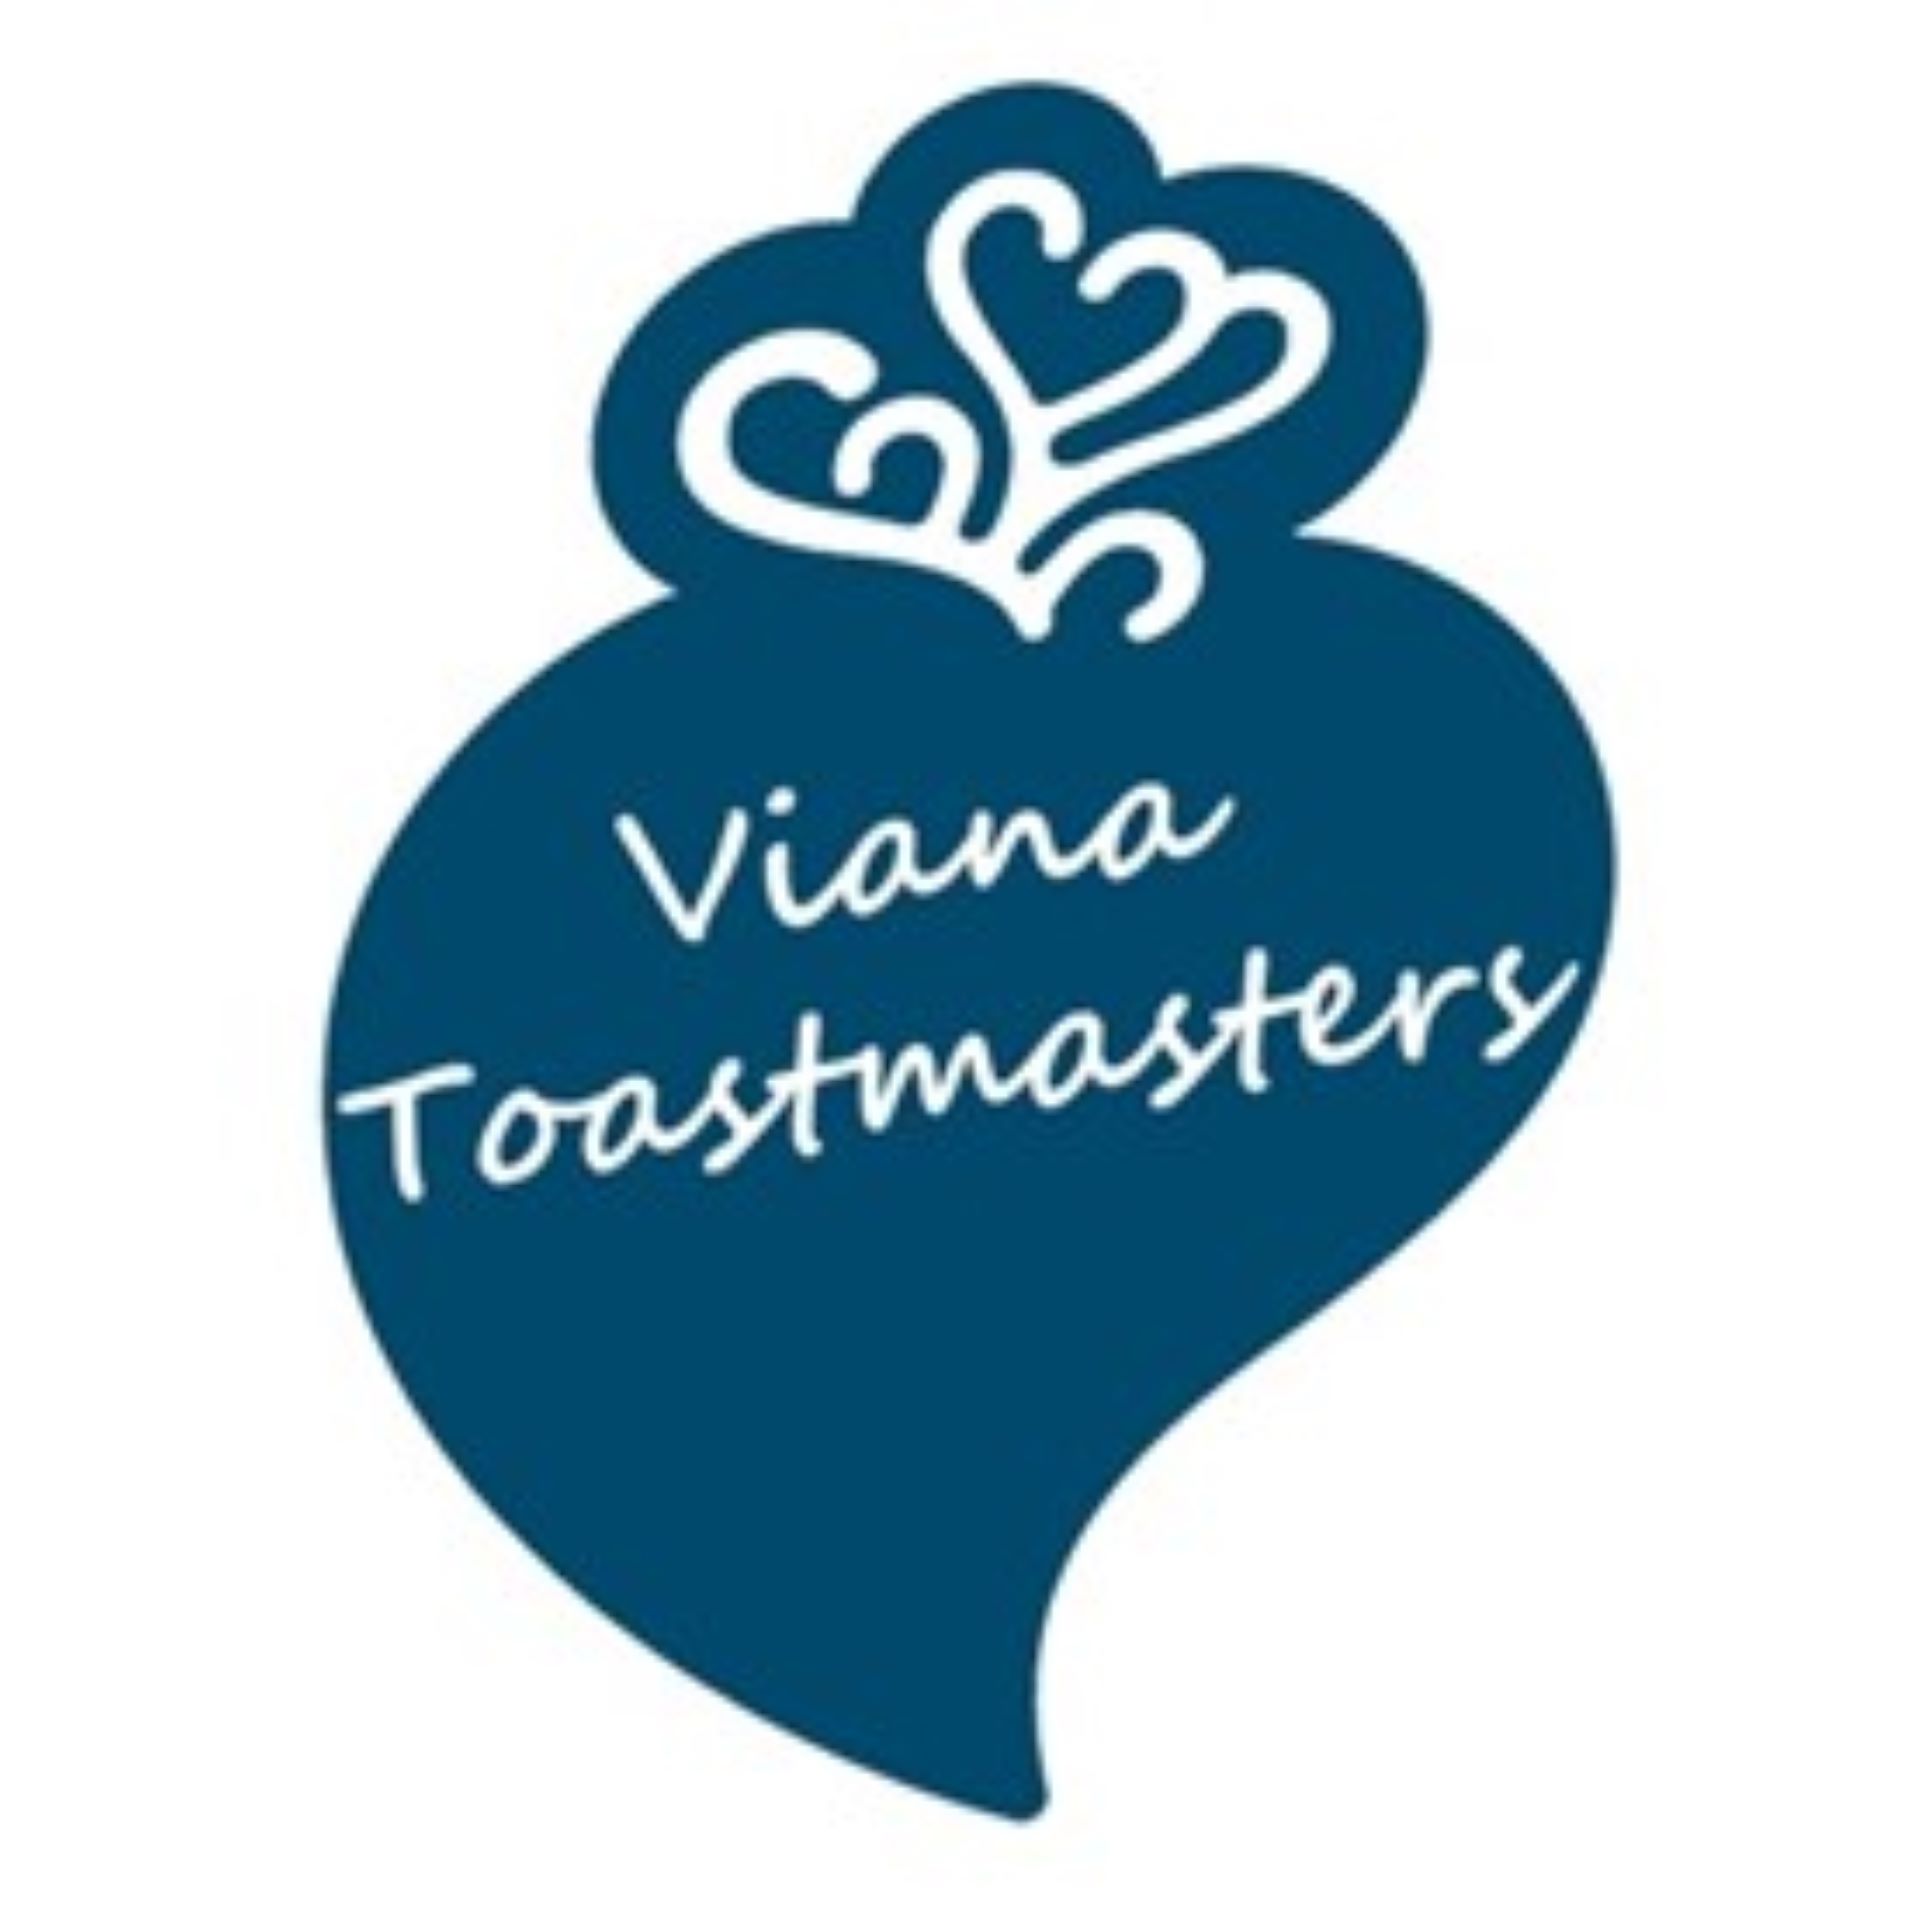 Sessões do Viana Toastmasters